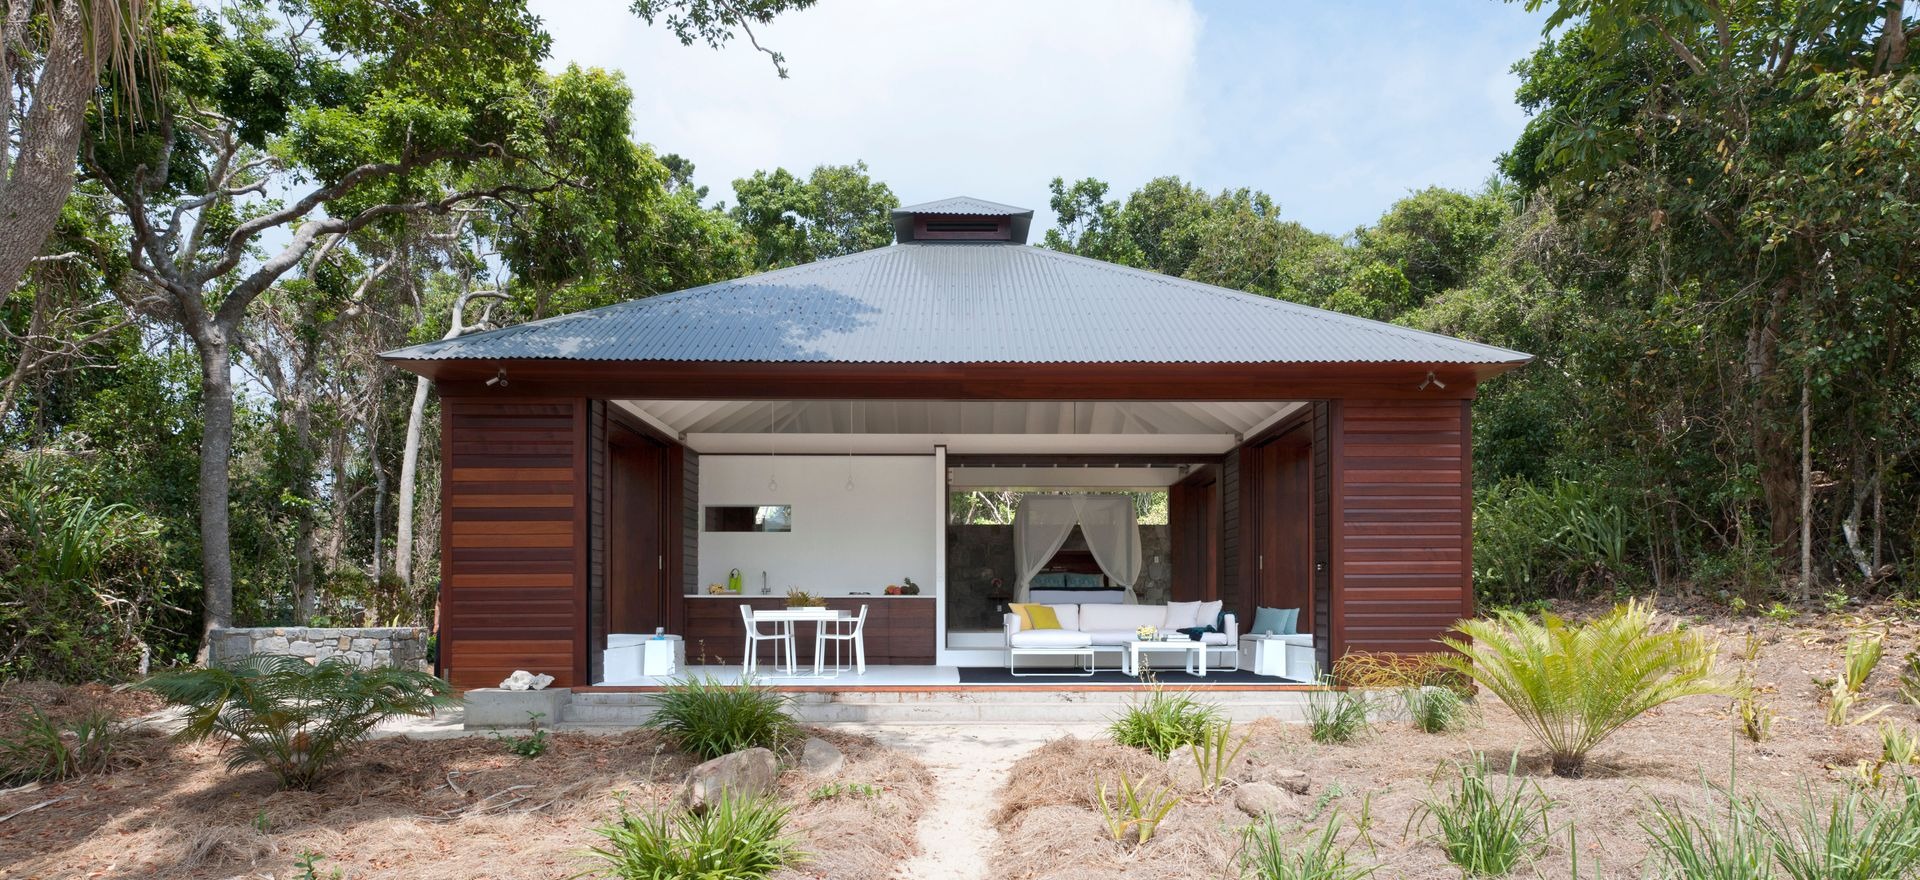 Beach house design: 10 eye-catching luxury homes